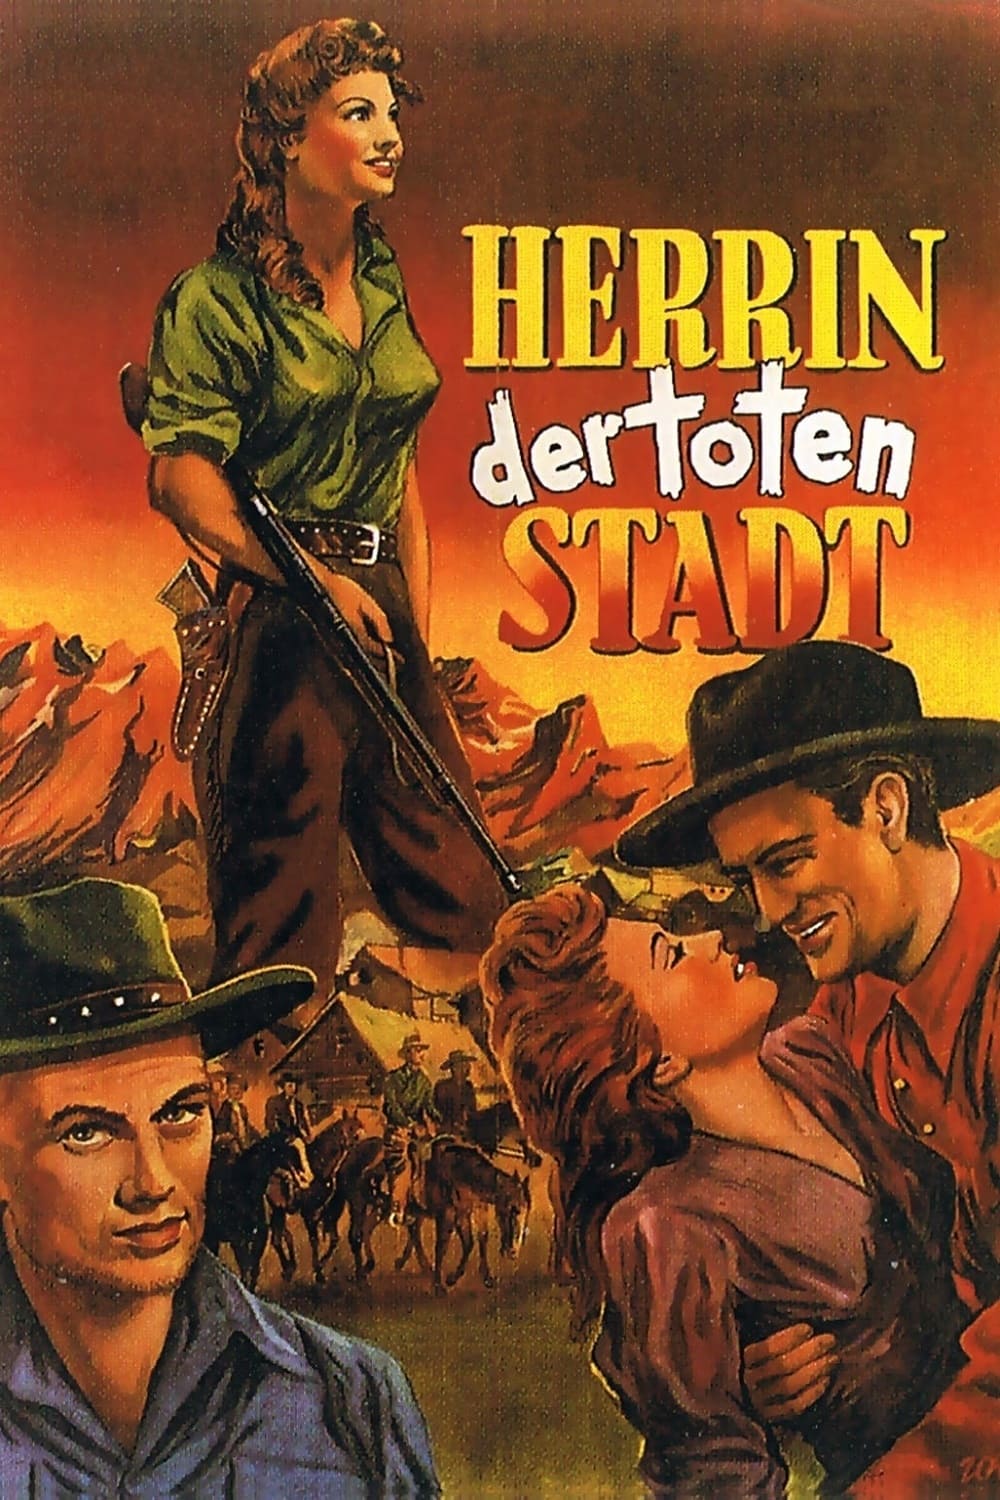 Yellow Sky (1948)